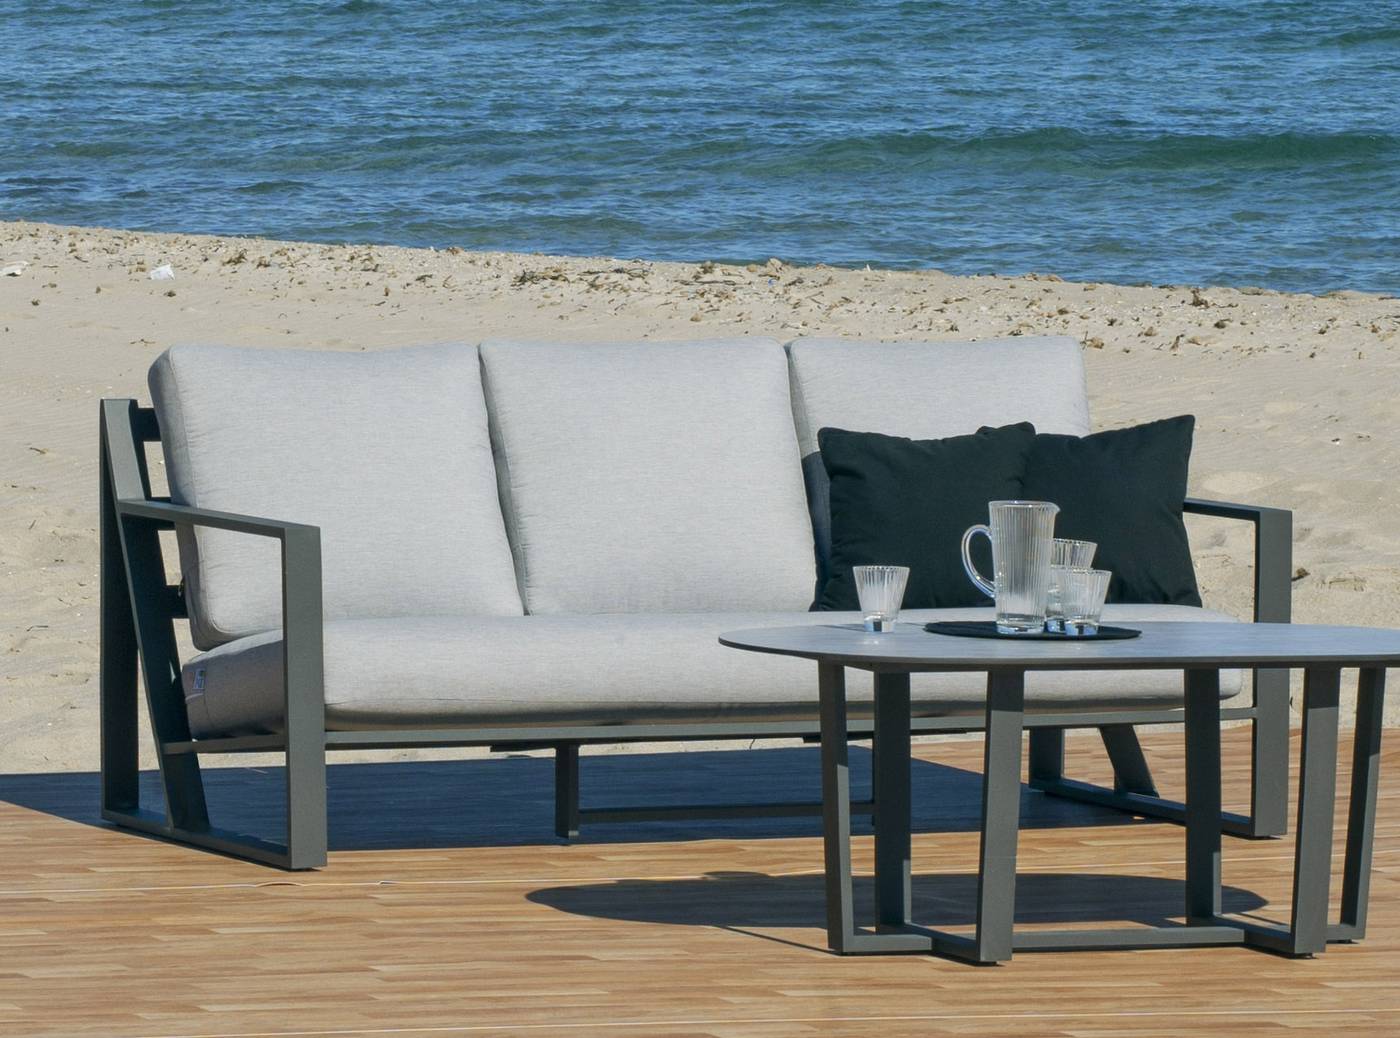 Set Aluminio Luxe Aleli-10 - Lujoso conjunto de aluminio: 1 sofá de 3 plazas + 2 sillones + 2 reposapiés + 1 mesa de centro + cojines.